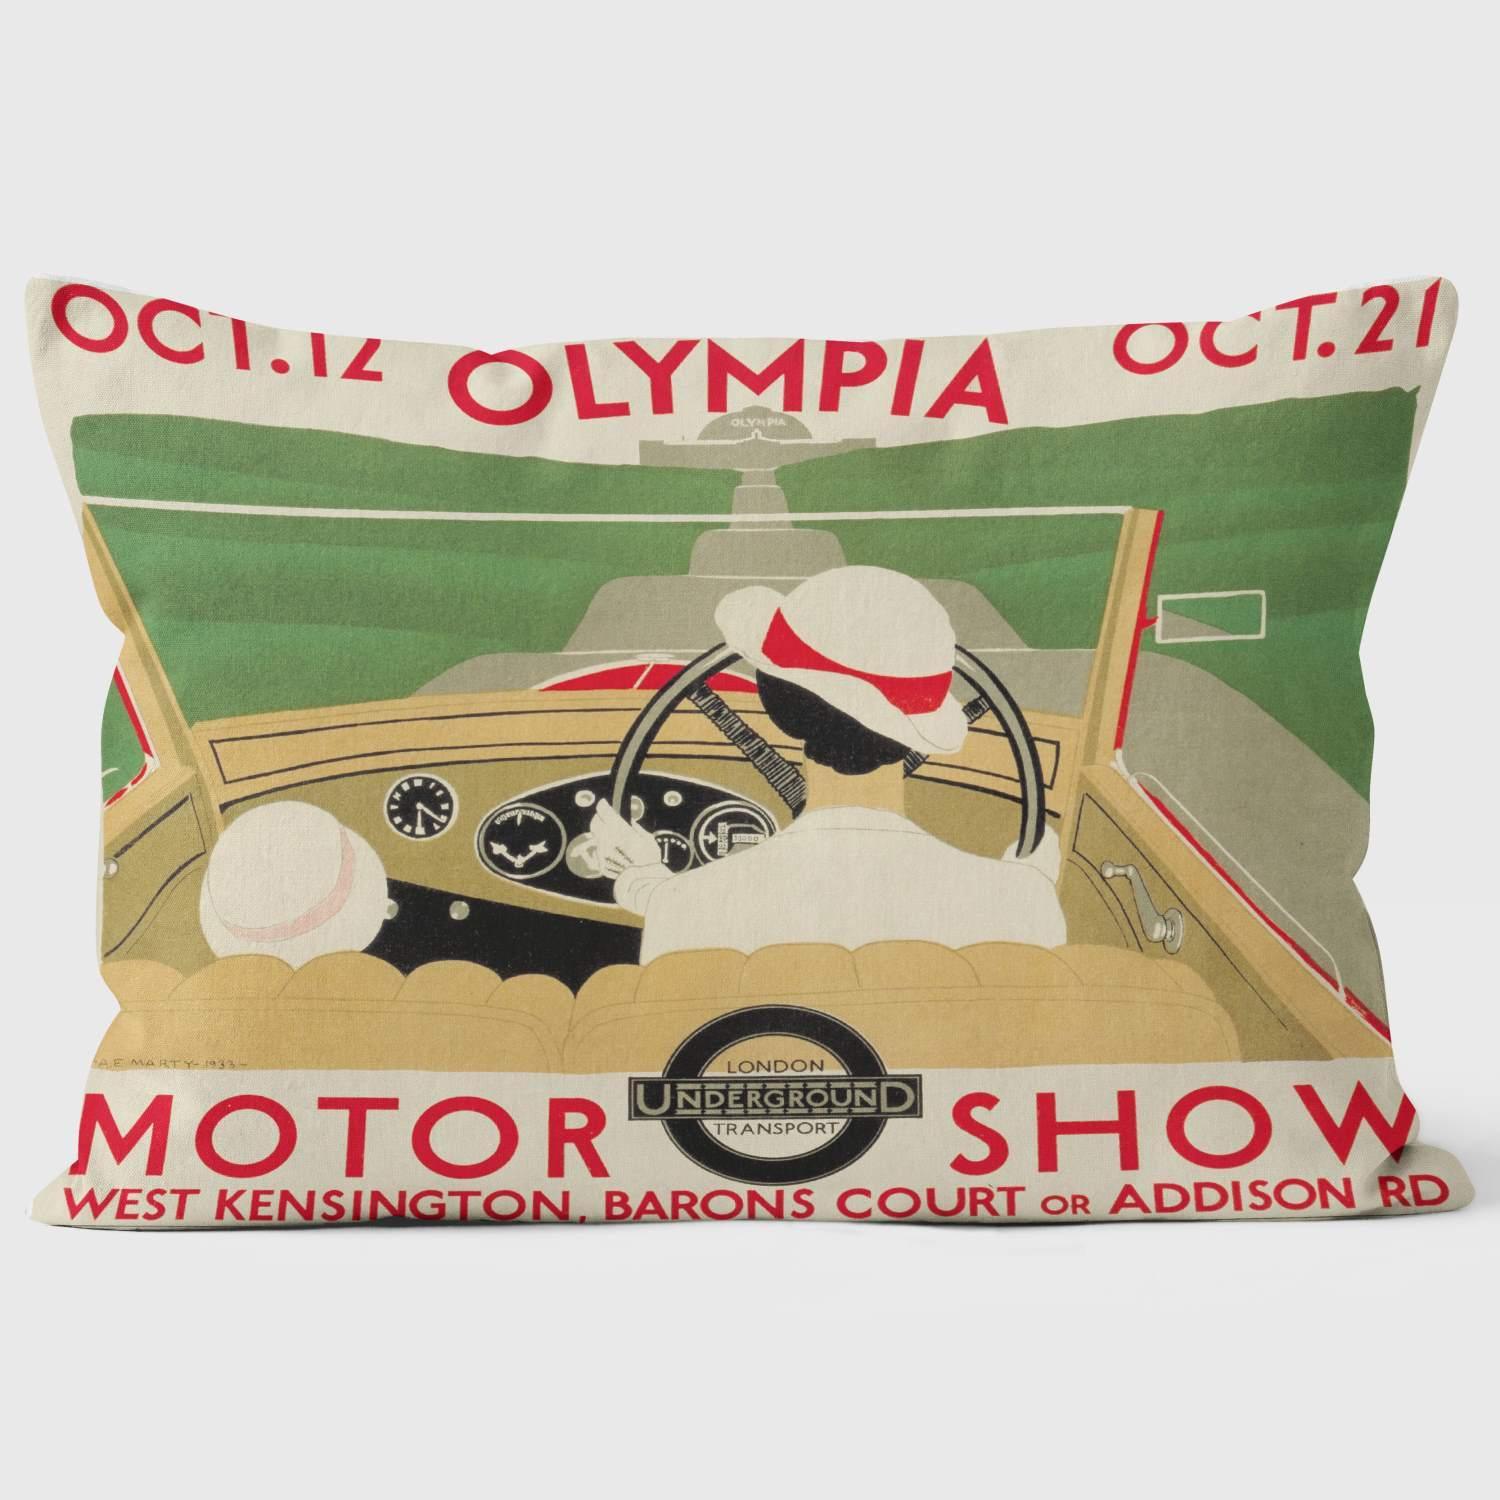 Motor Show Olympia Oct21 - London Transport Cushion - Handmade Cushions UK - WeLoveCushions